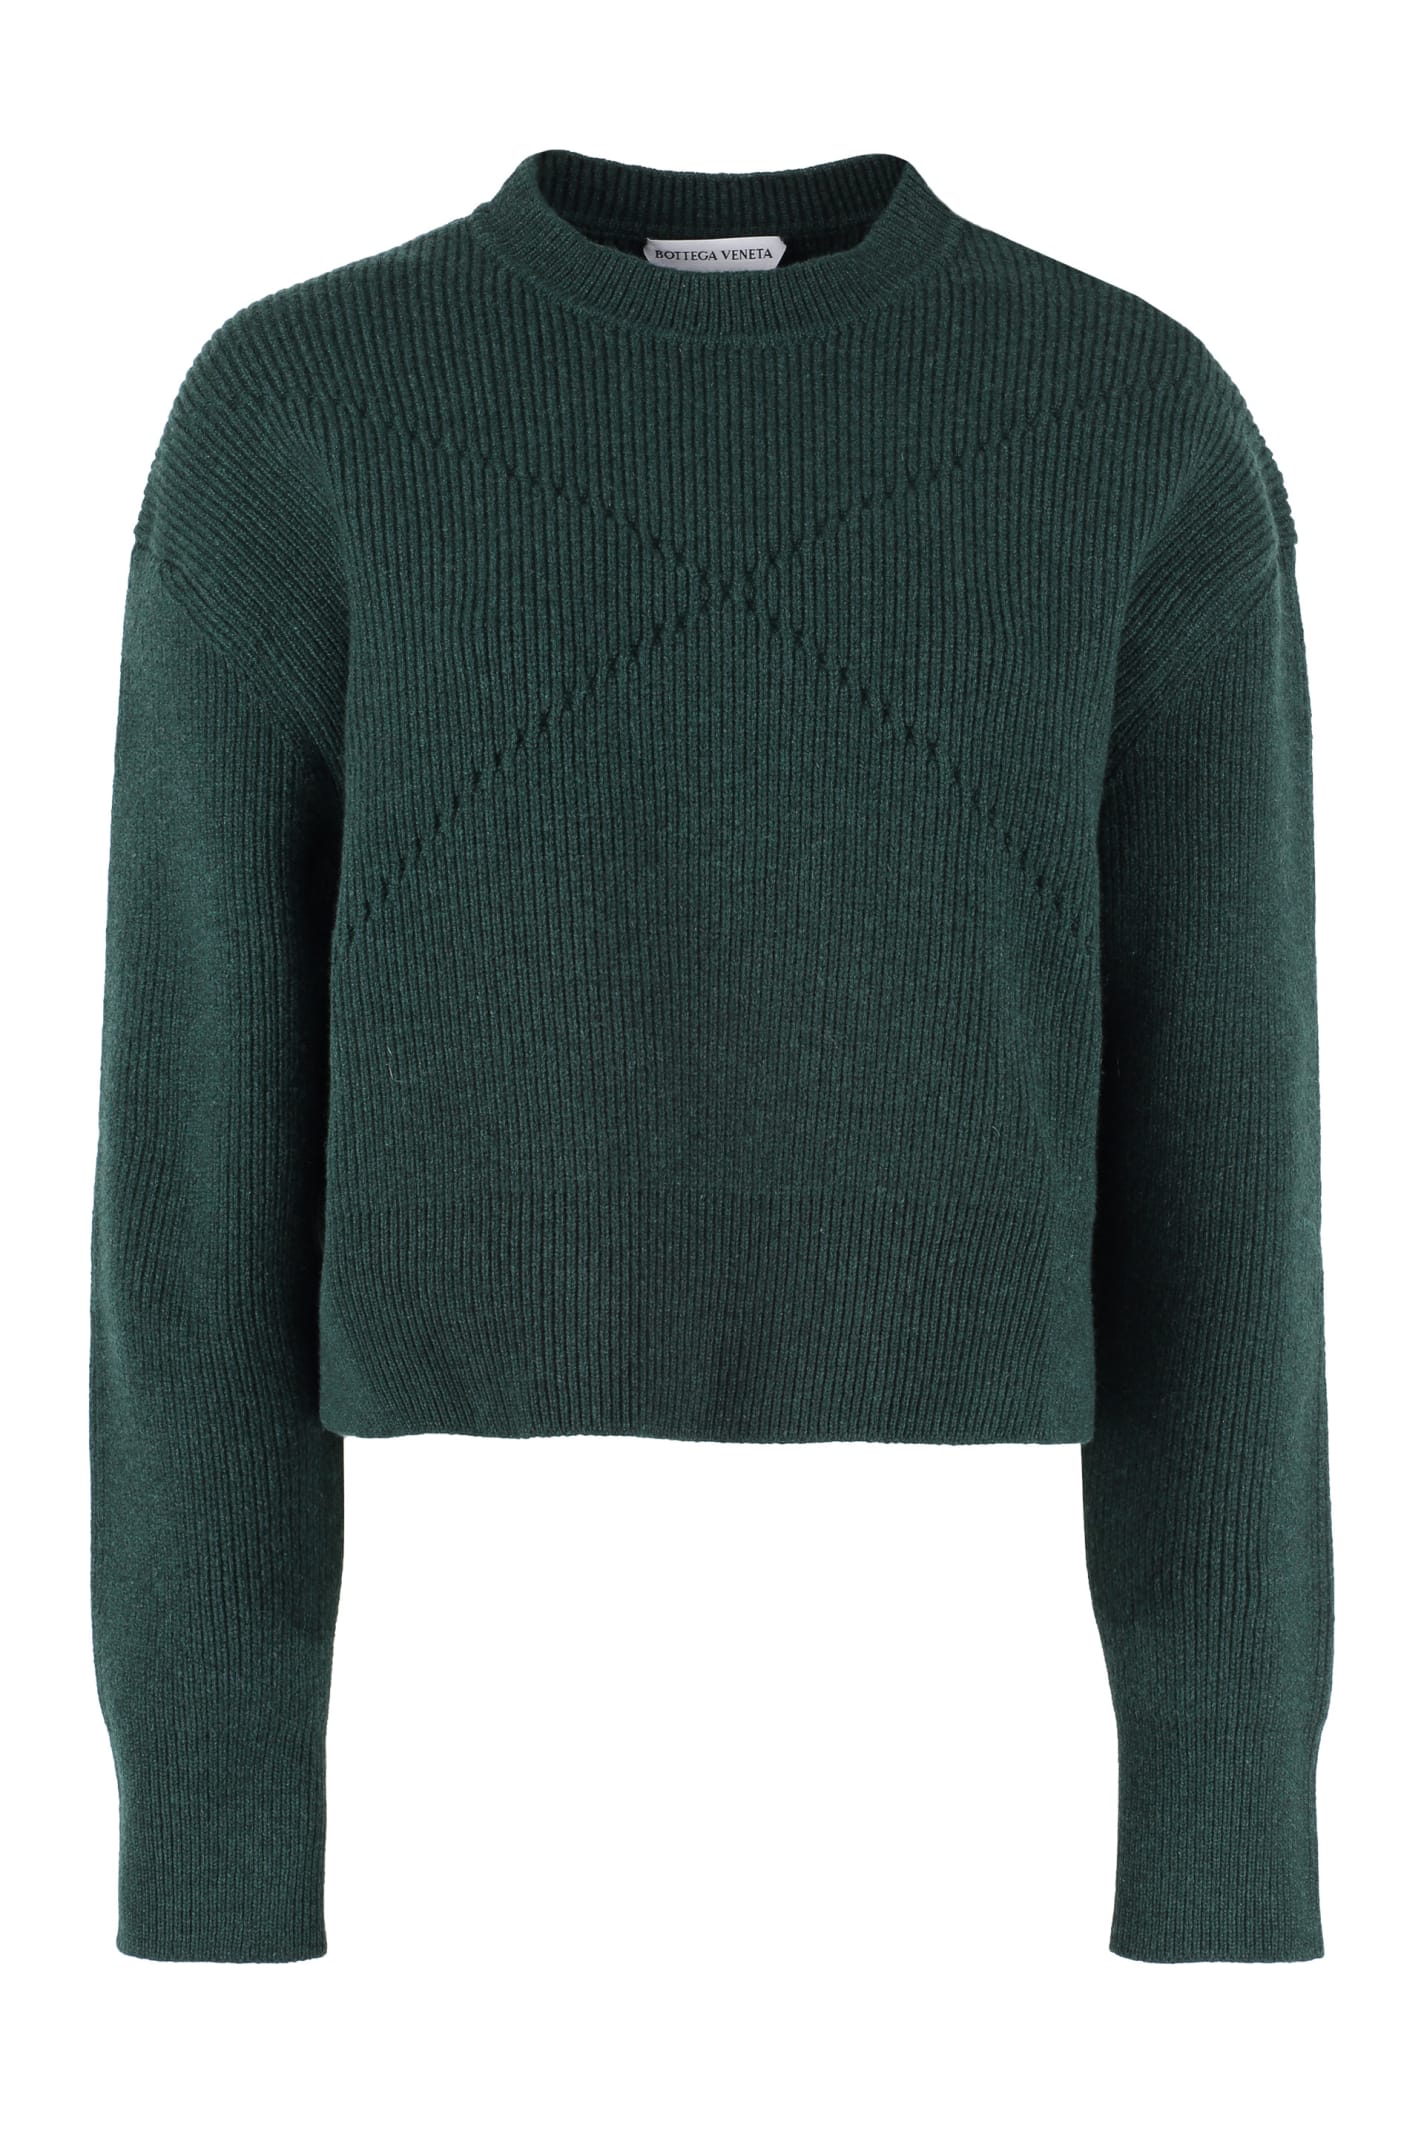 Bottega Veneta Ribbed Cashmere Sweater